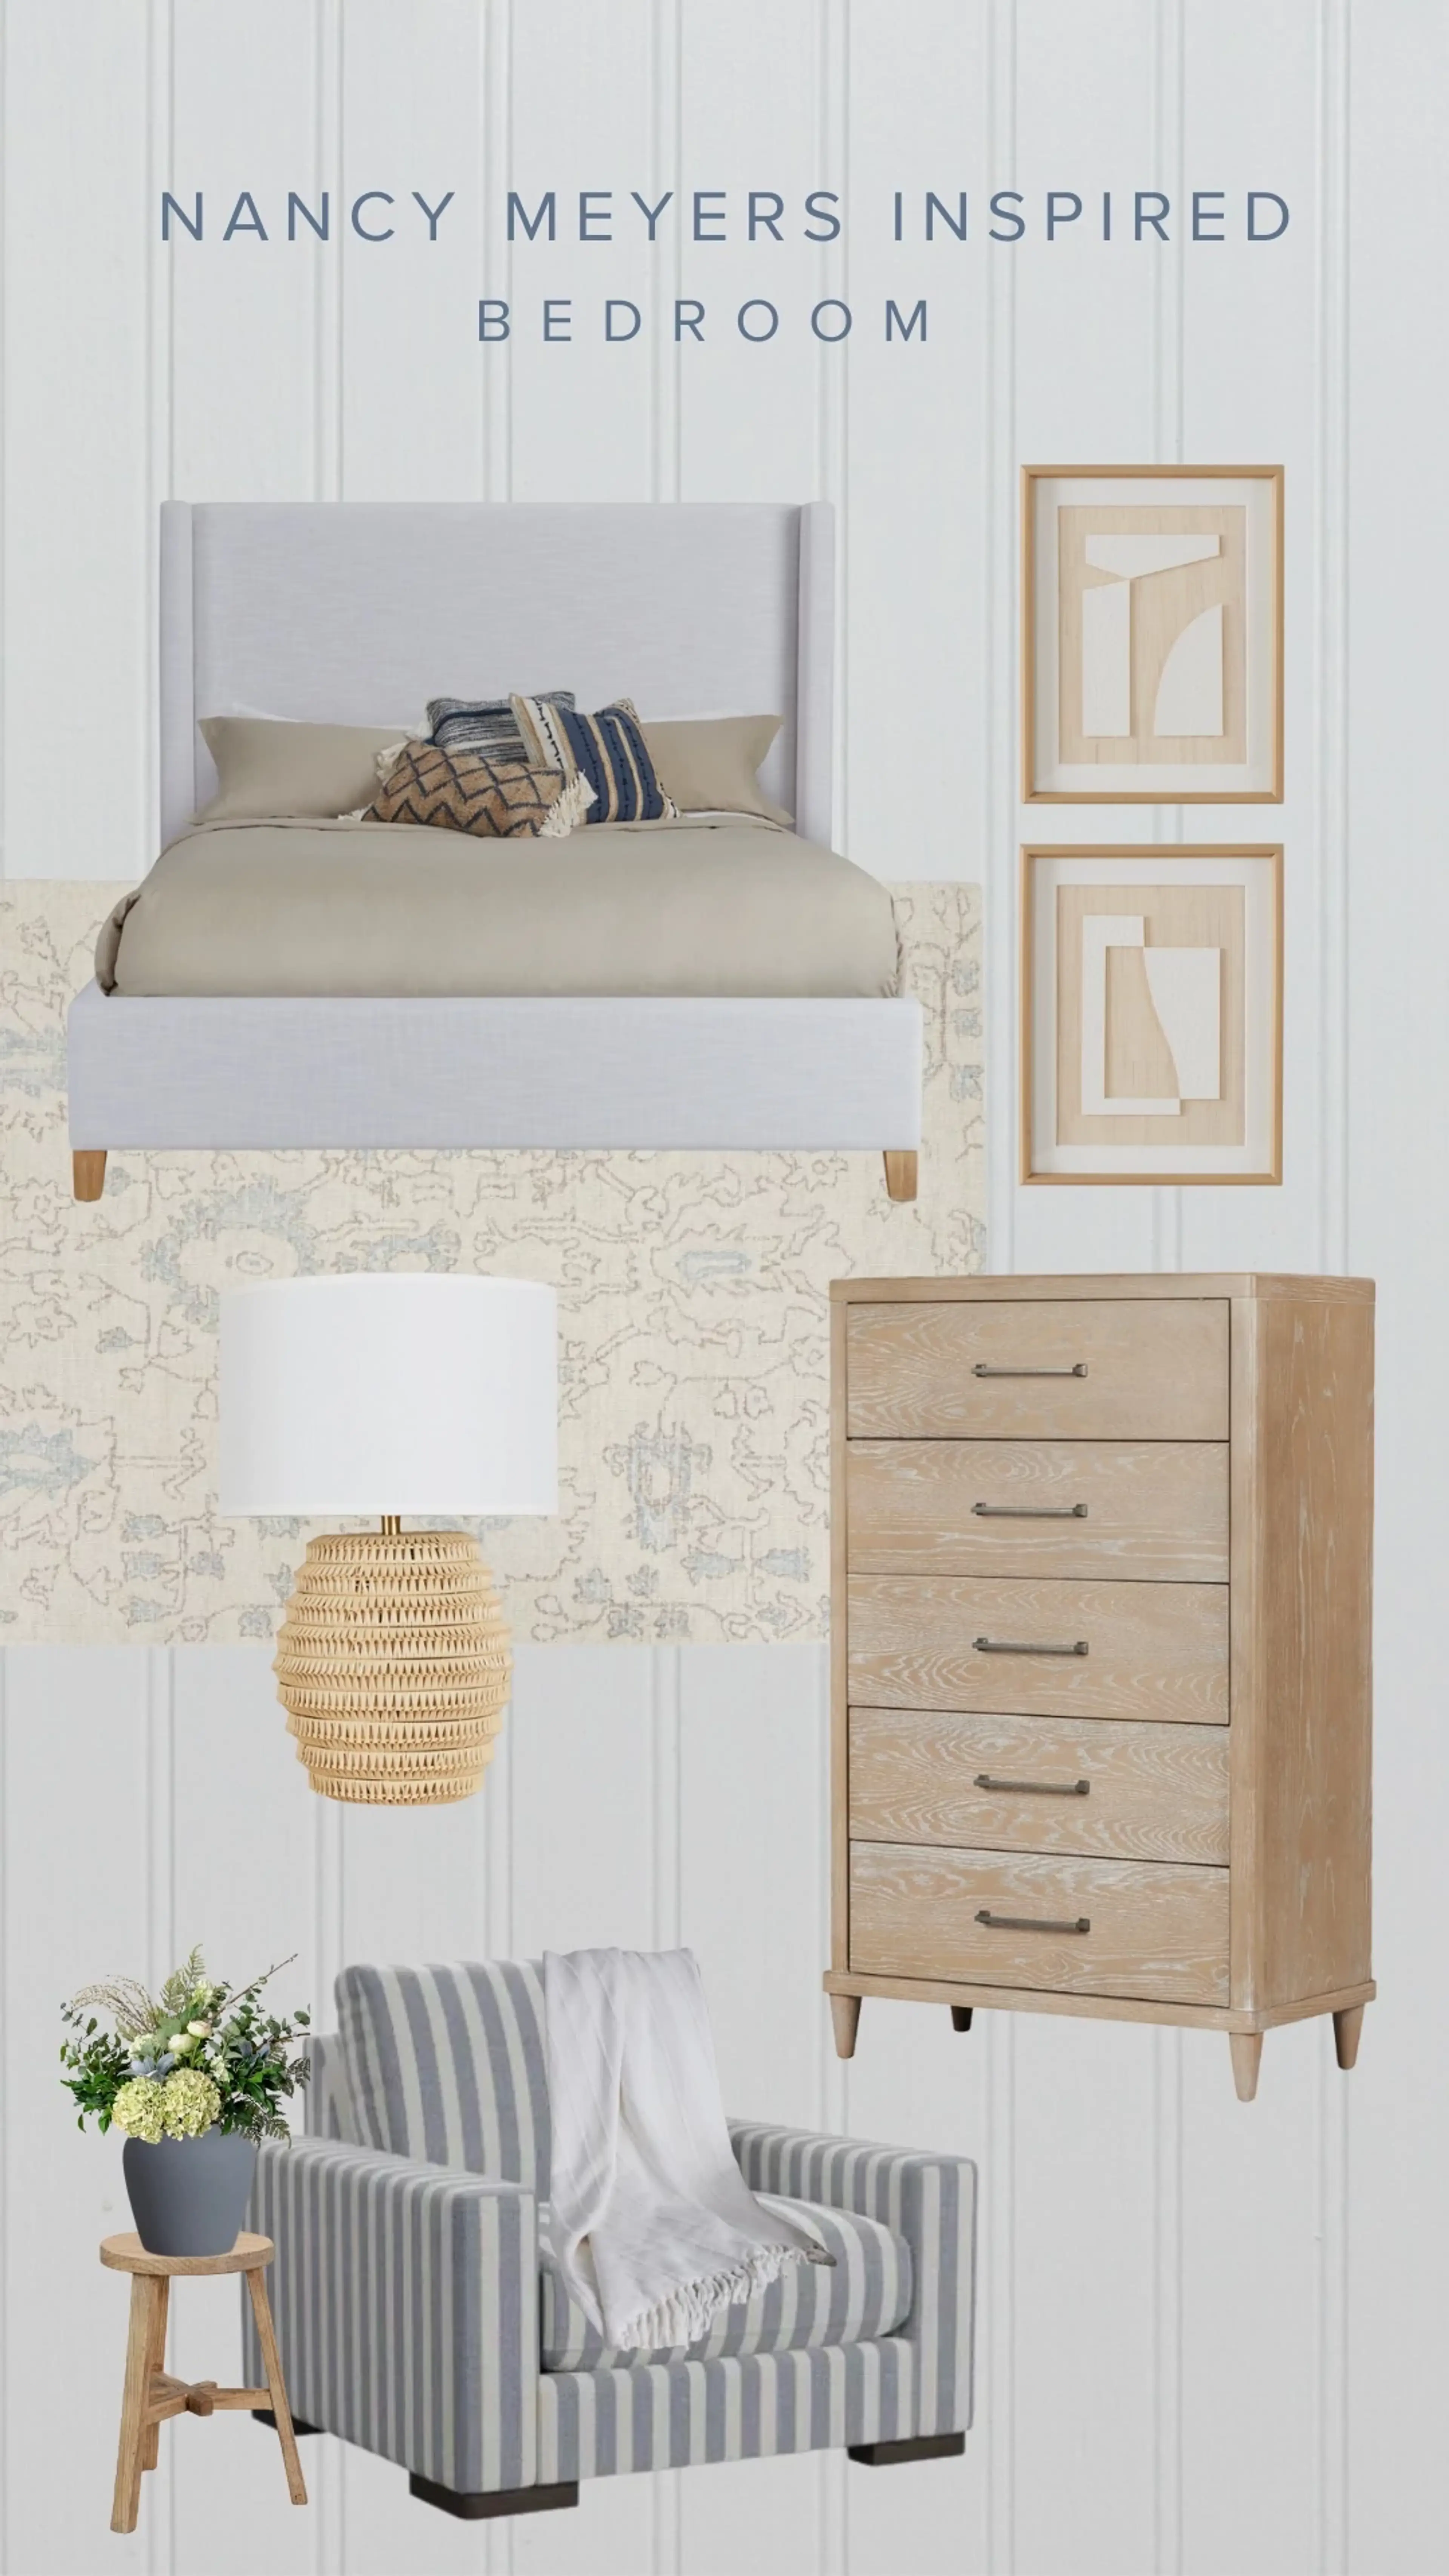 Nancy Meyers Inspired Bedroom.jpg